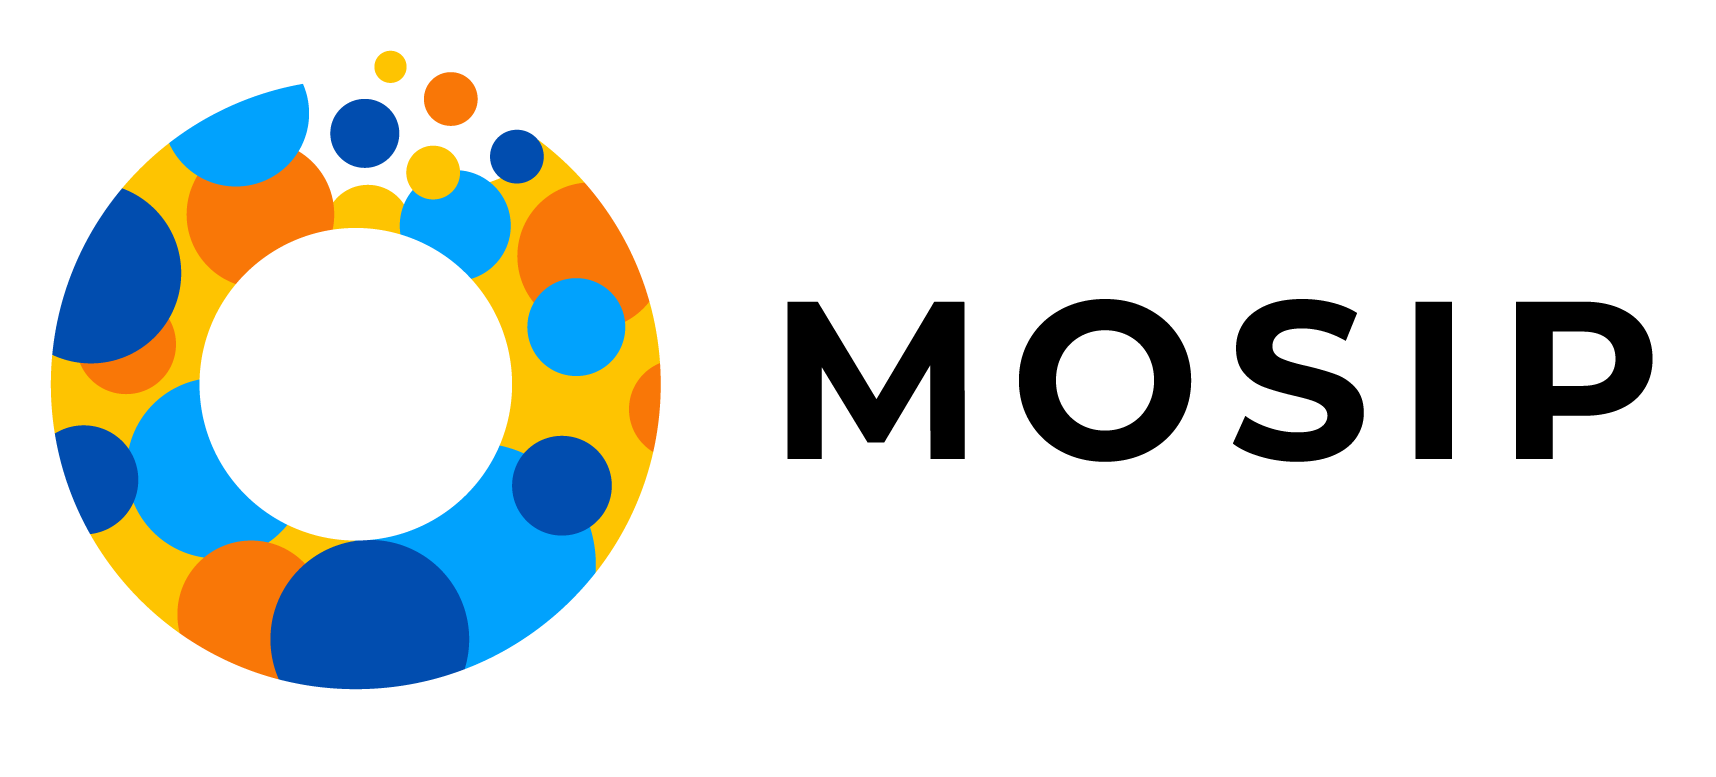 mosip logo